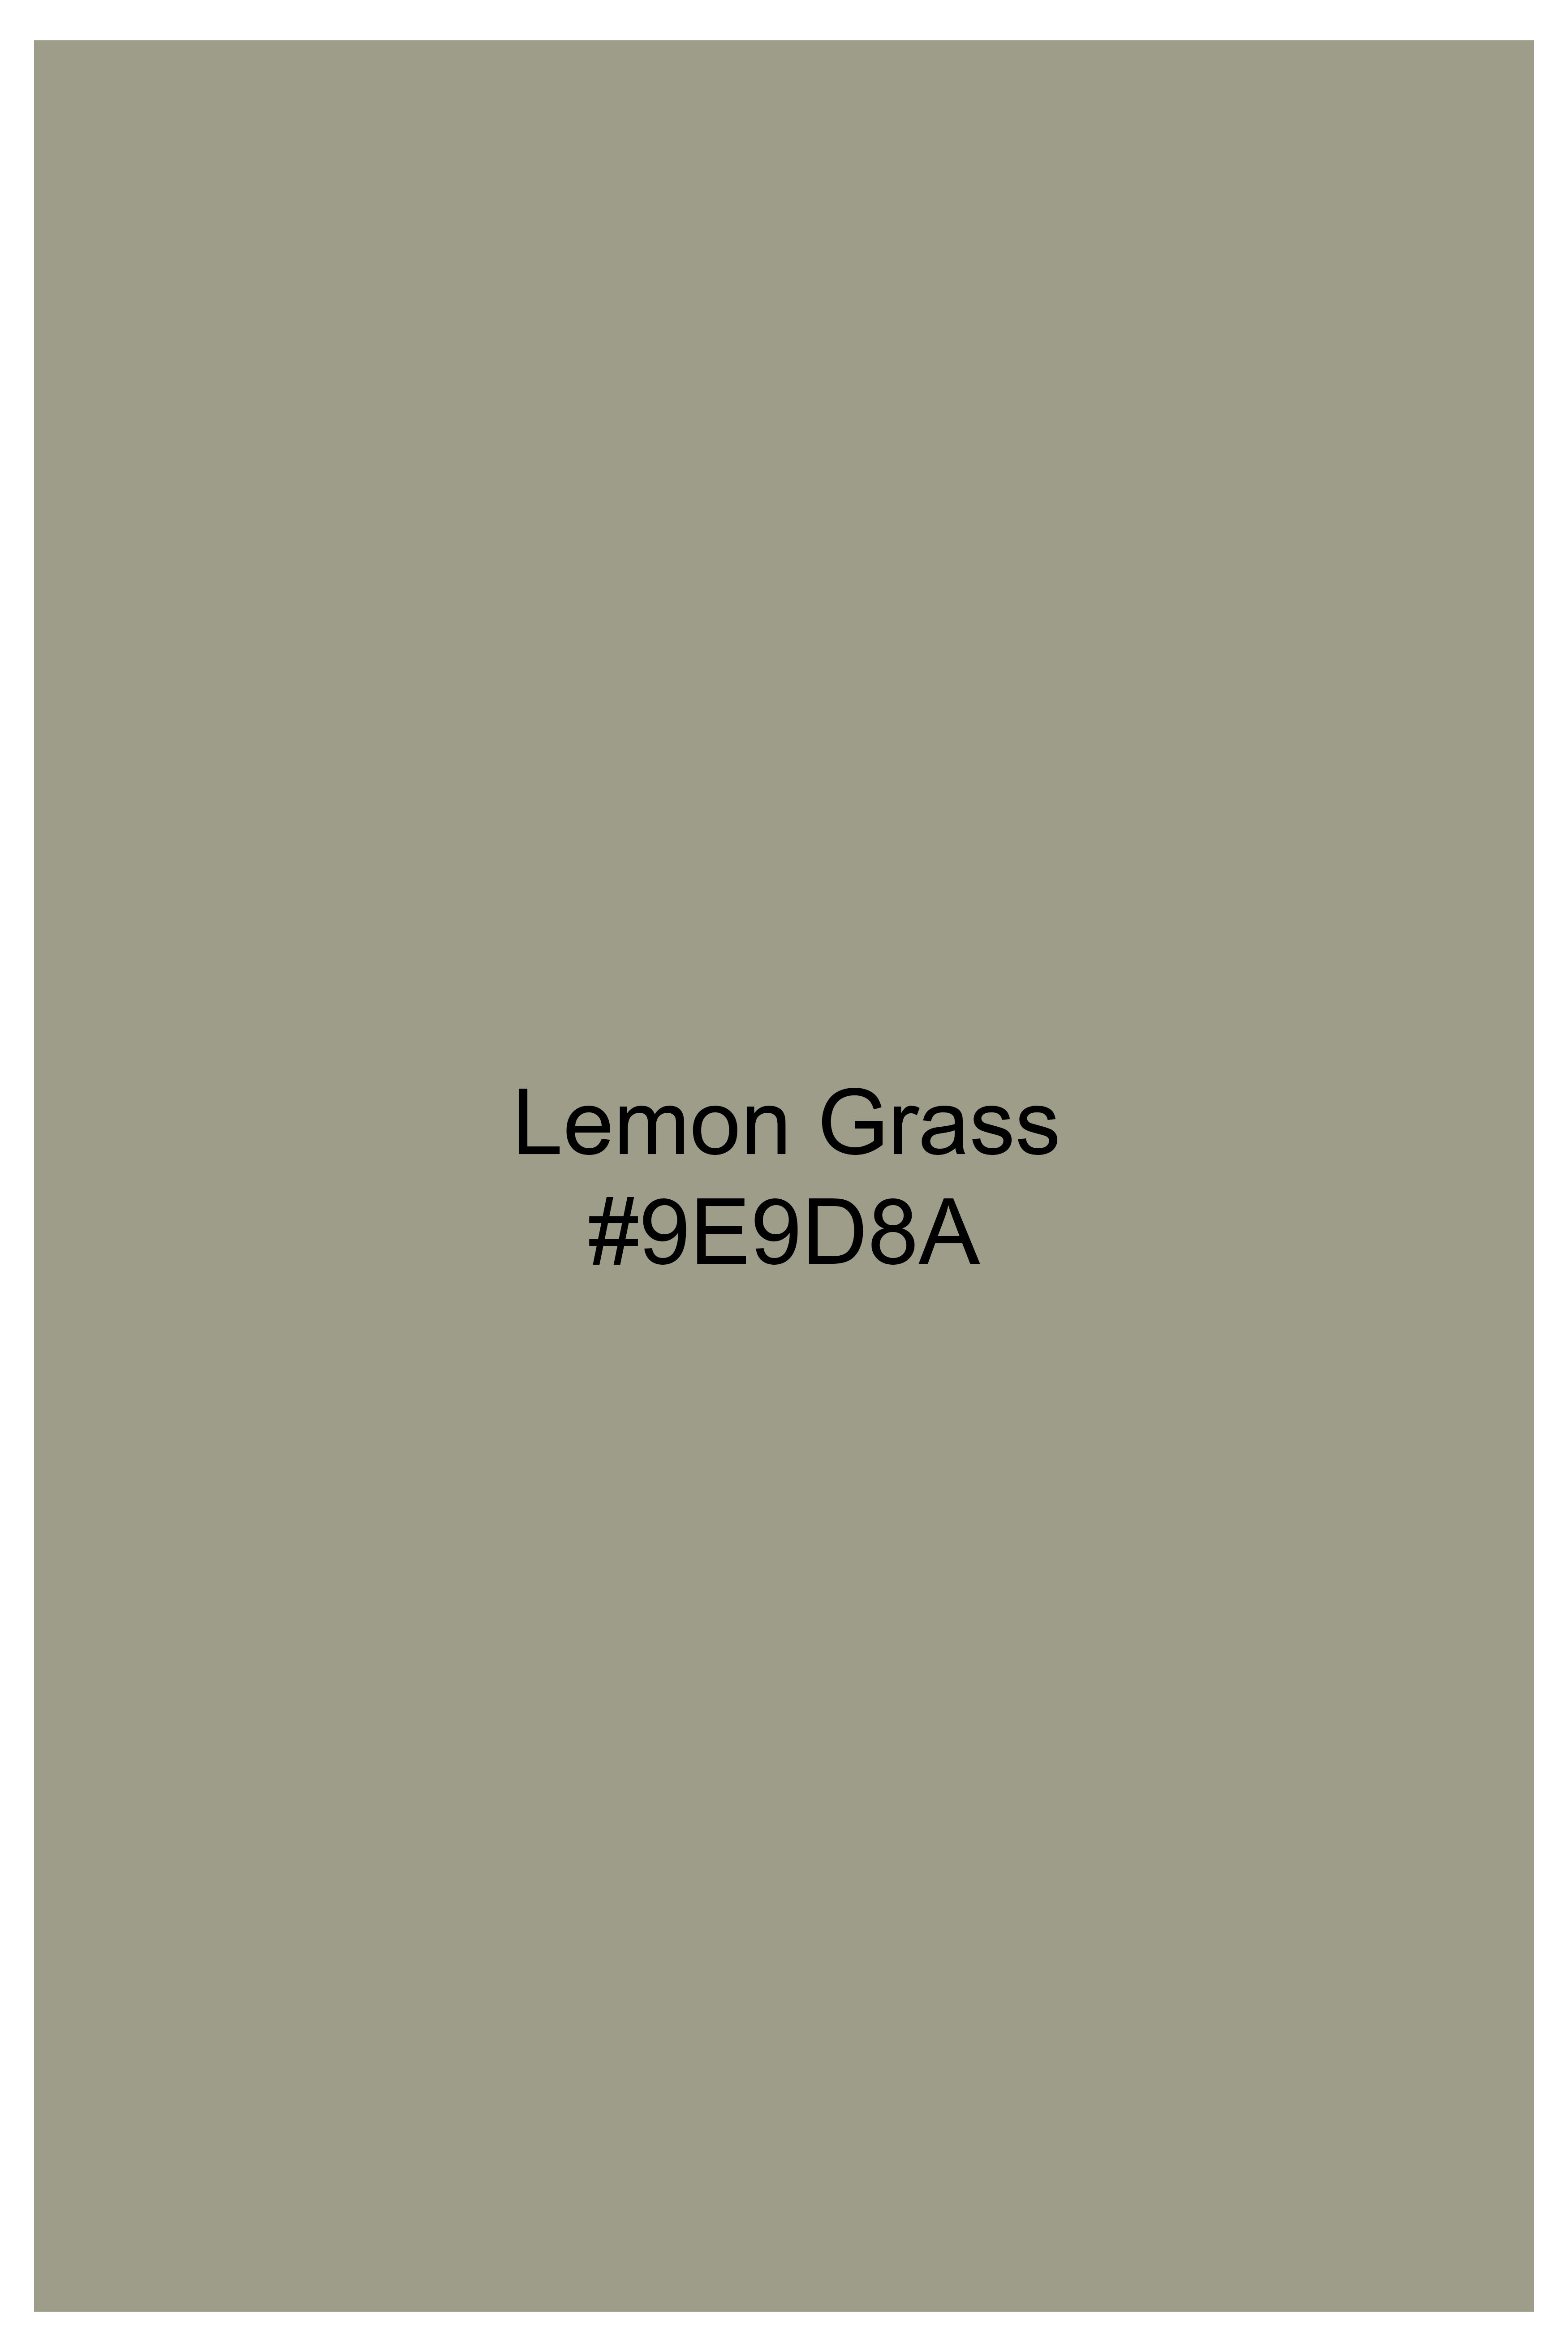 Lemon Grass Green Premium Cotton Cross Buttoned Bandhgala Blazer BL3099-CBG-36, BL3099-CBG-38, BL3099-CBG-40, BL3099-CBG-42, BL3099-CBG-44, BL3099-CBG-46, BL3099-CBG-48, BL3099-CBG-50, BL3099-CBG-52, BL3099-CBG-54, BL3099-CBG-56, BL3099-CBG-58, BL3099-CBG-60